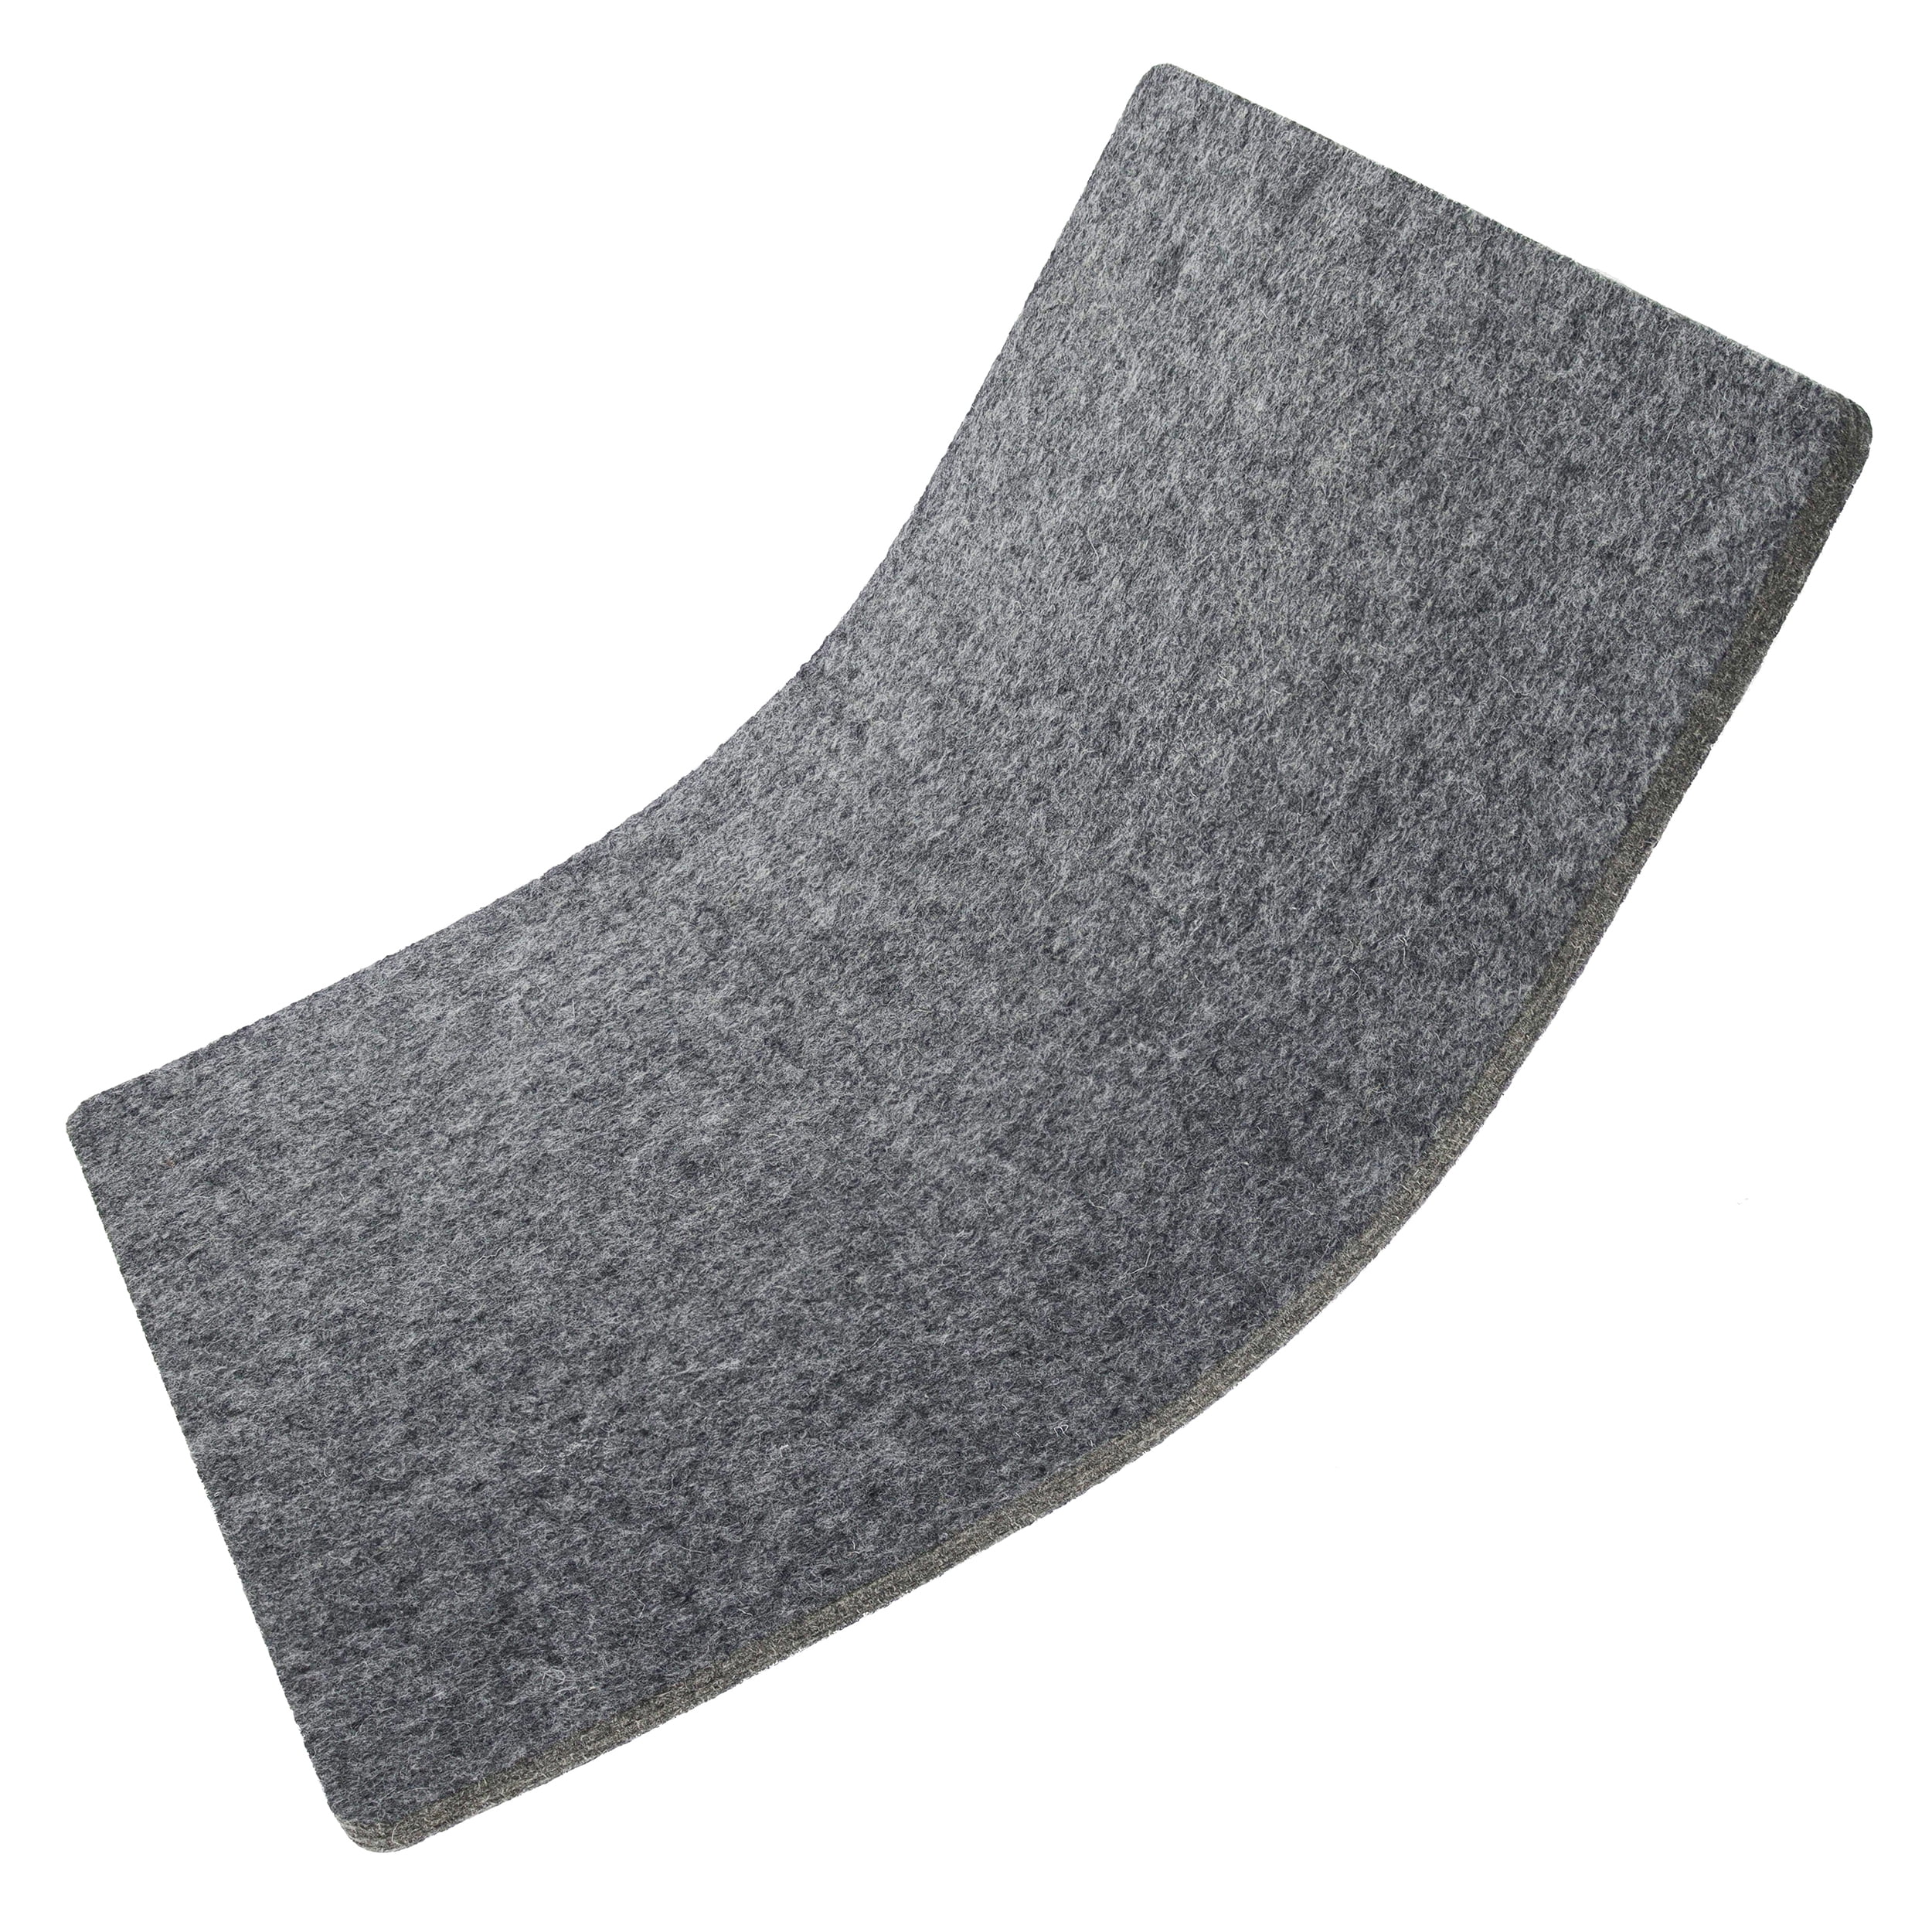 Portable Ironing Wool Mat (Iron Anywhere) Ironing Board Replacement, Iron  Board Alternative Pad,20.3*20.3cm 